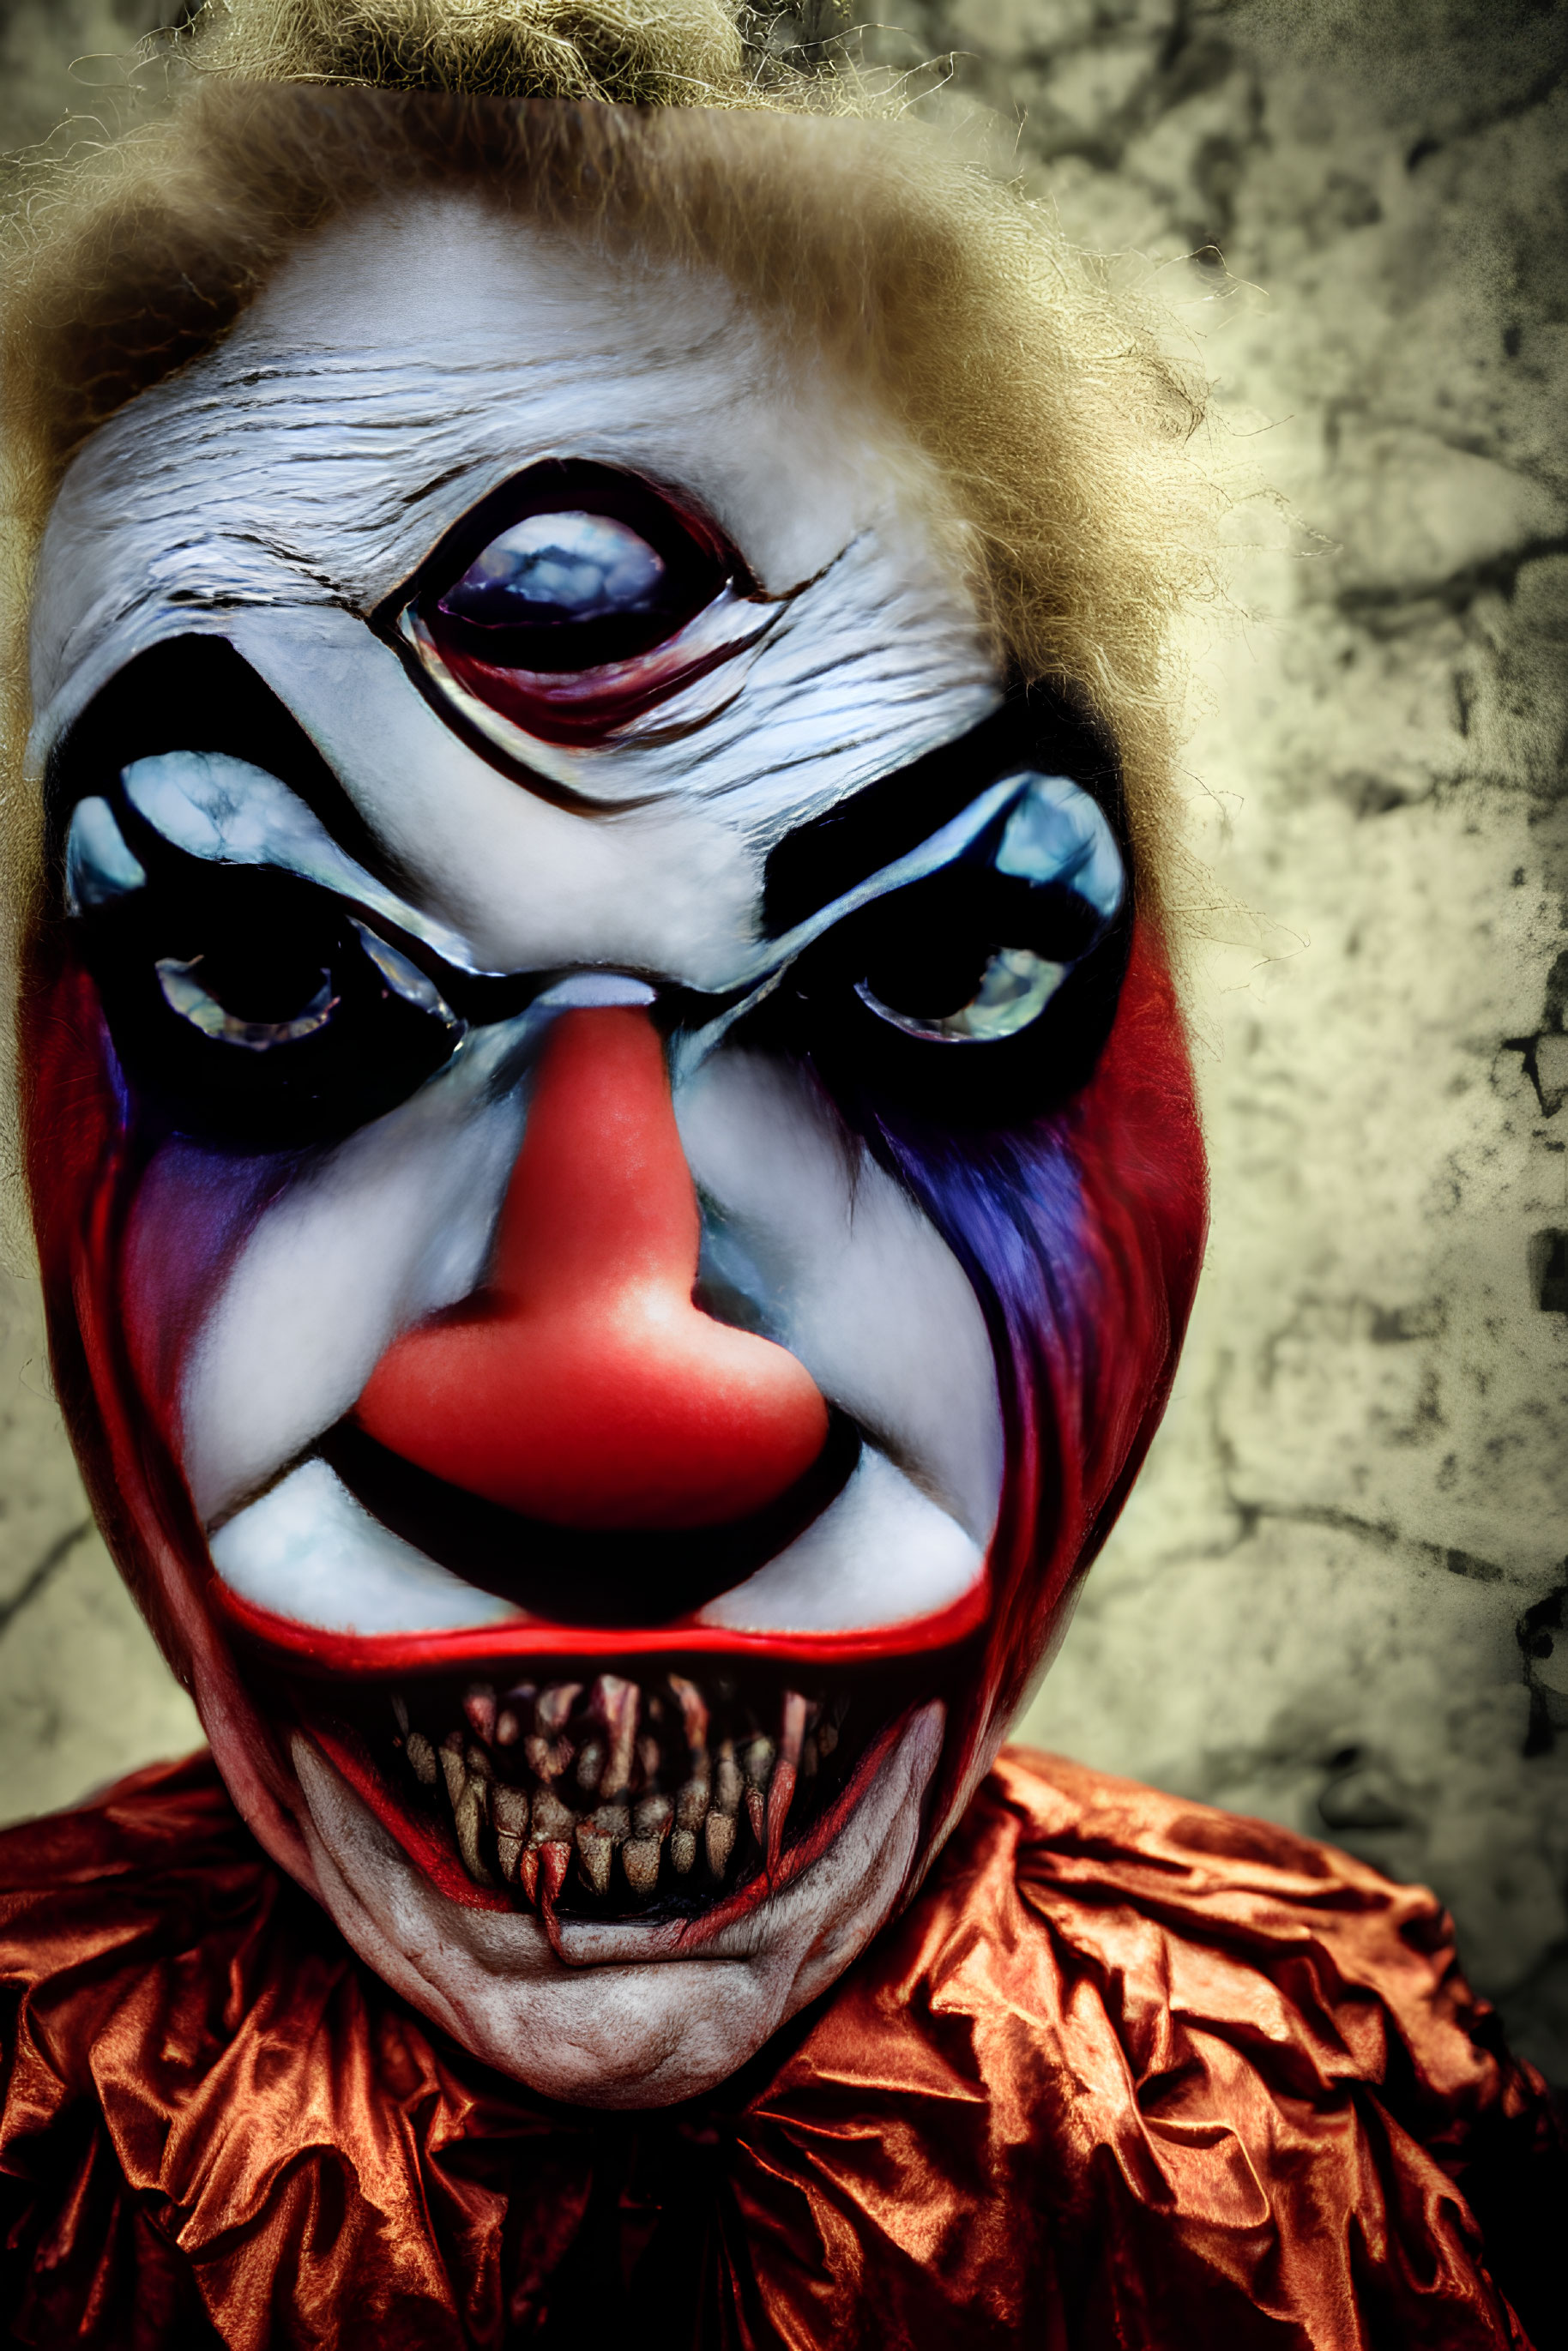 Detailed Close-Up of Person in Menacing Clown Makeup